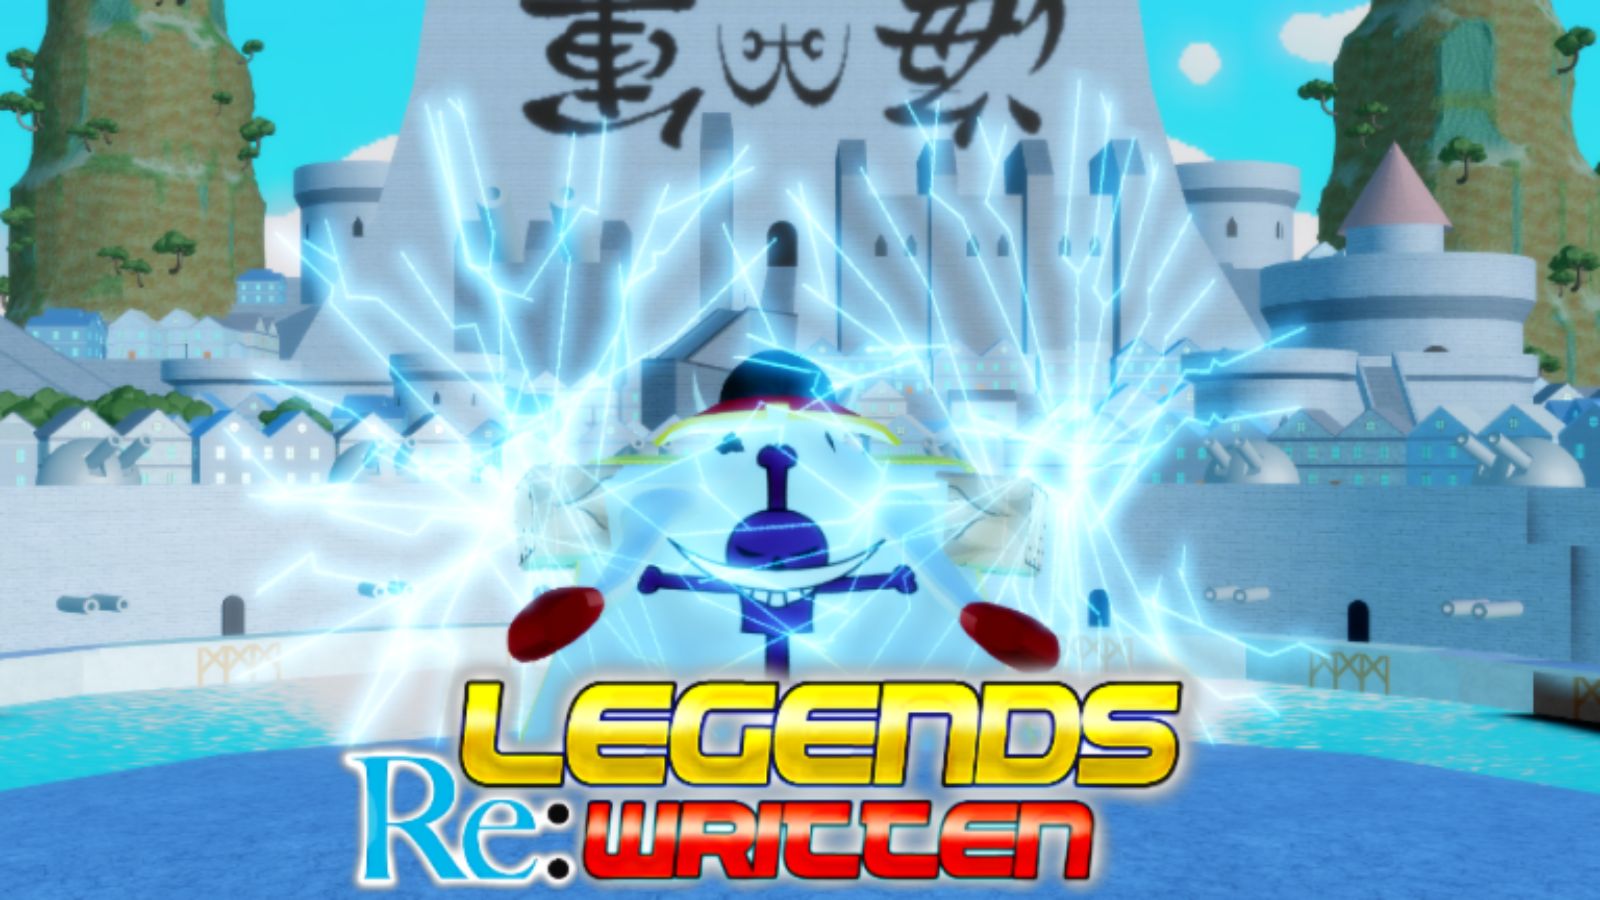 Roblox Legends Re:Written codes (July 2023): Free rolls, boosts